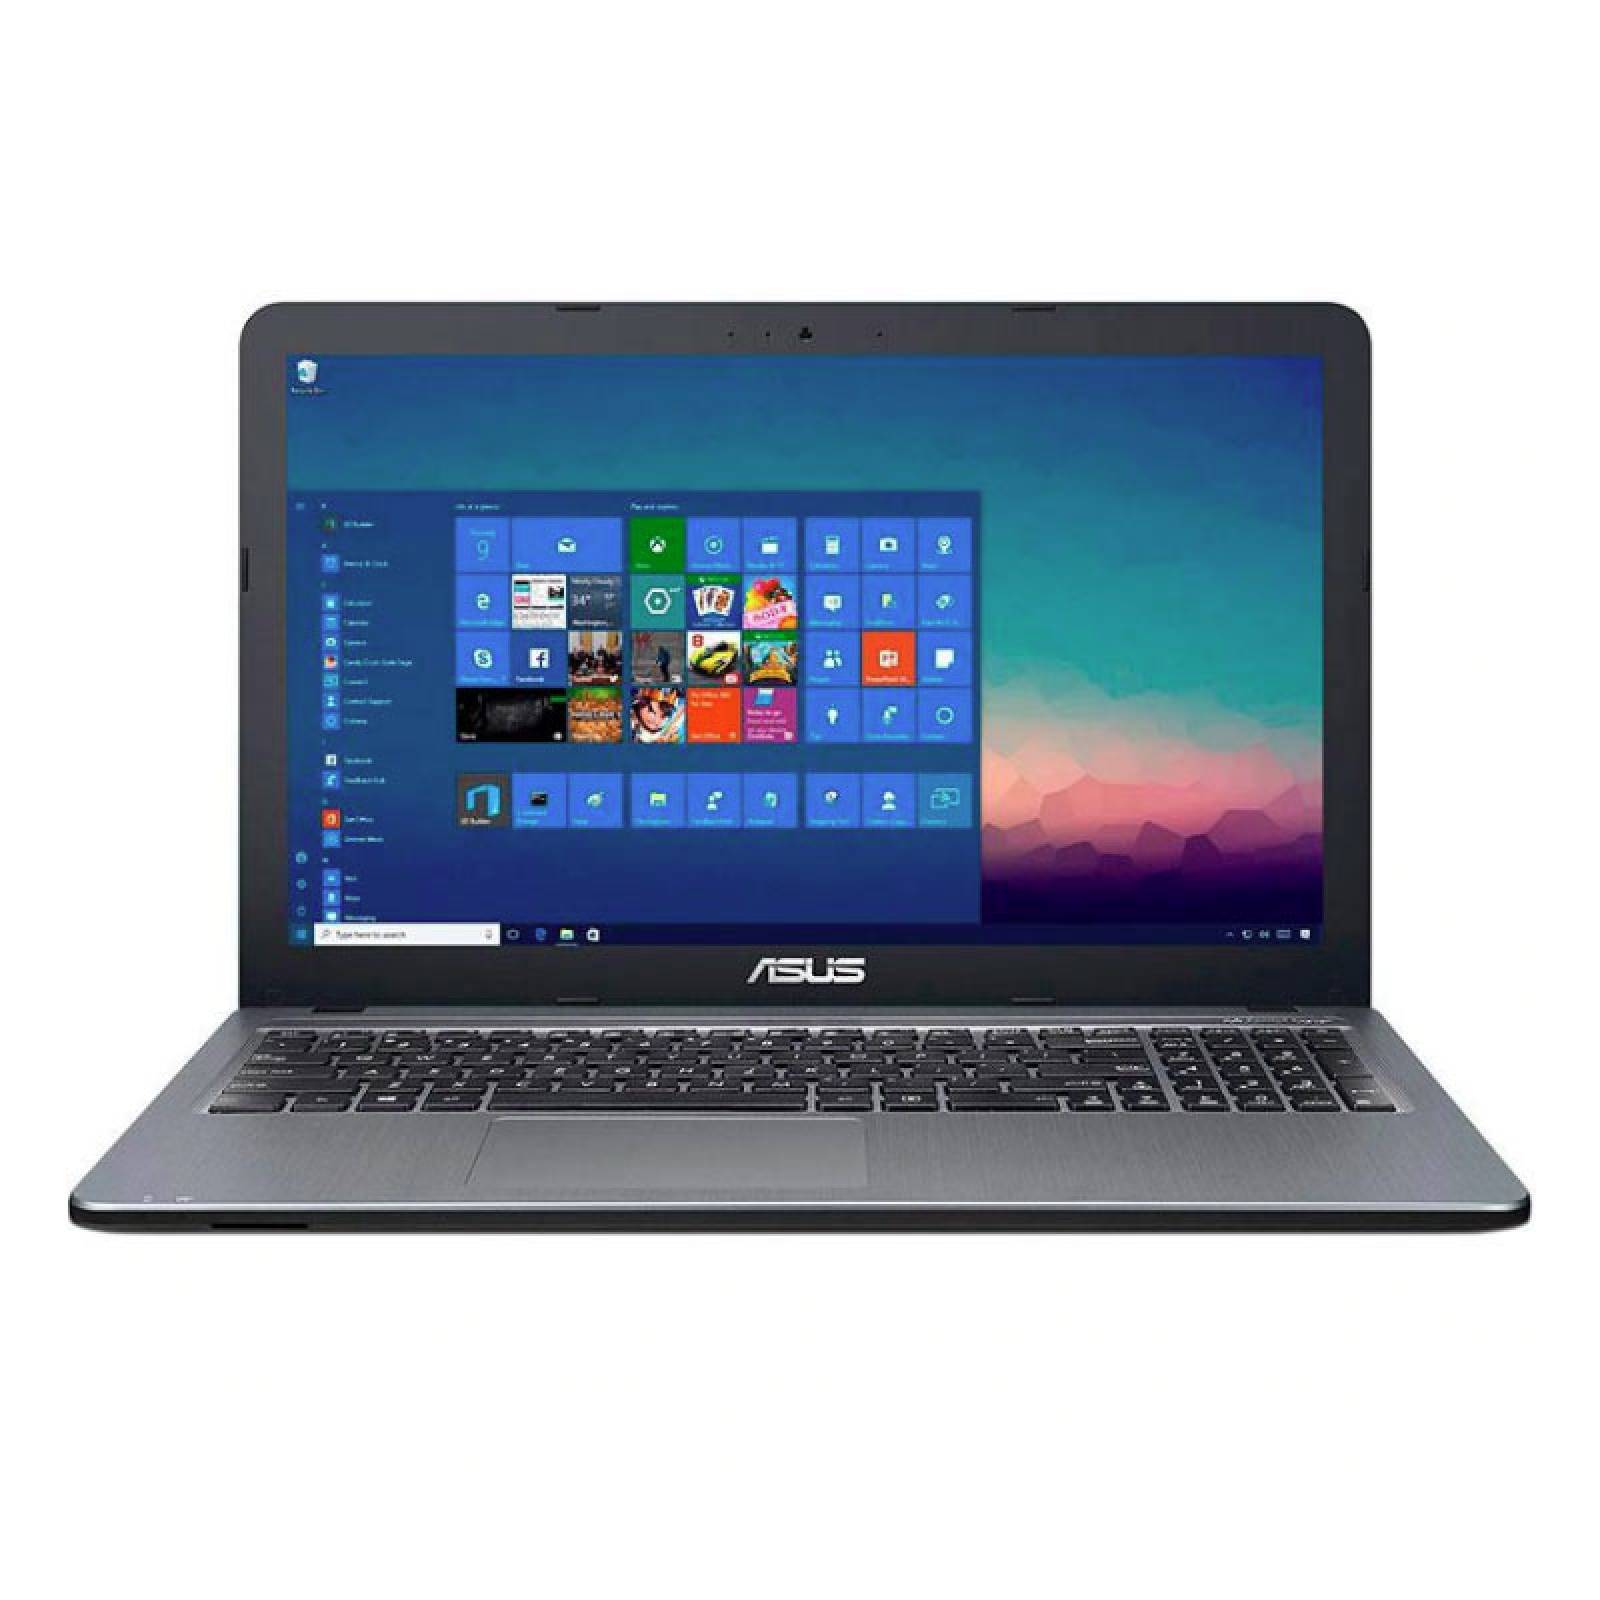 Laptop ASUS A540MA Procesador Intel Celeron N 4000
 Memoria de 4GB LPDDR4
 Disco Duro de 500GB
 Pantalla de 15.6 pulgadas LED Windows 10 Home